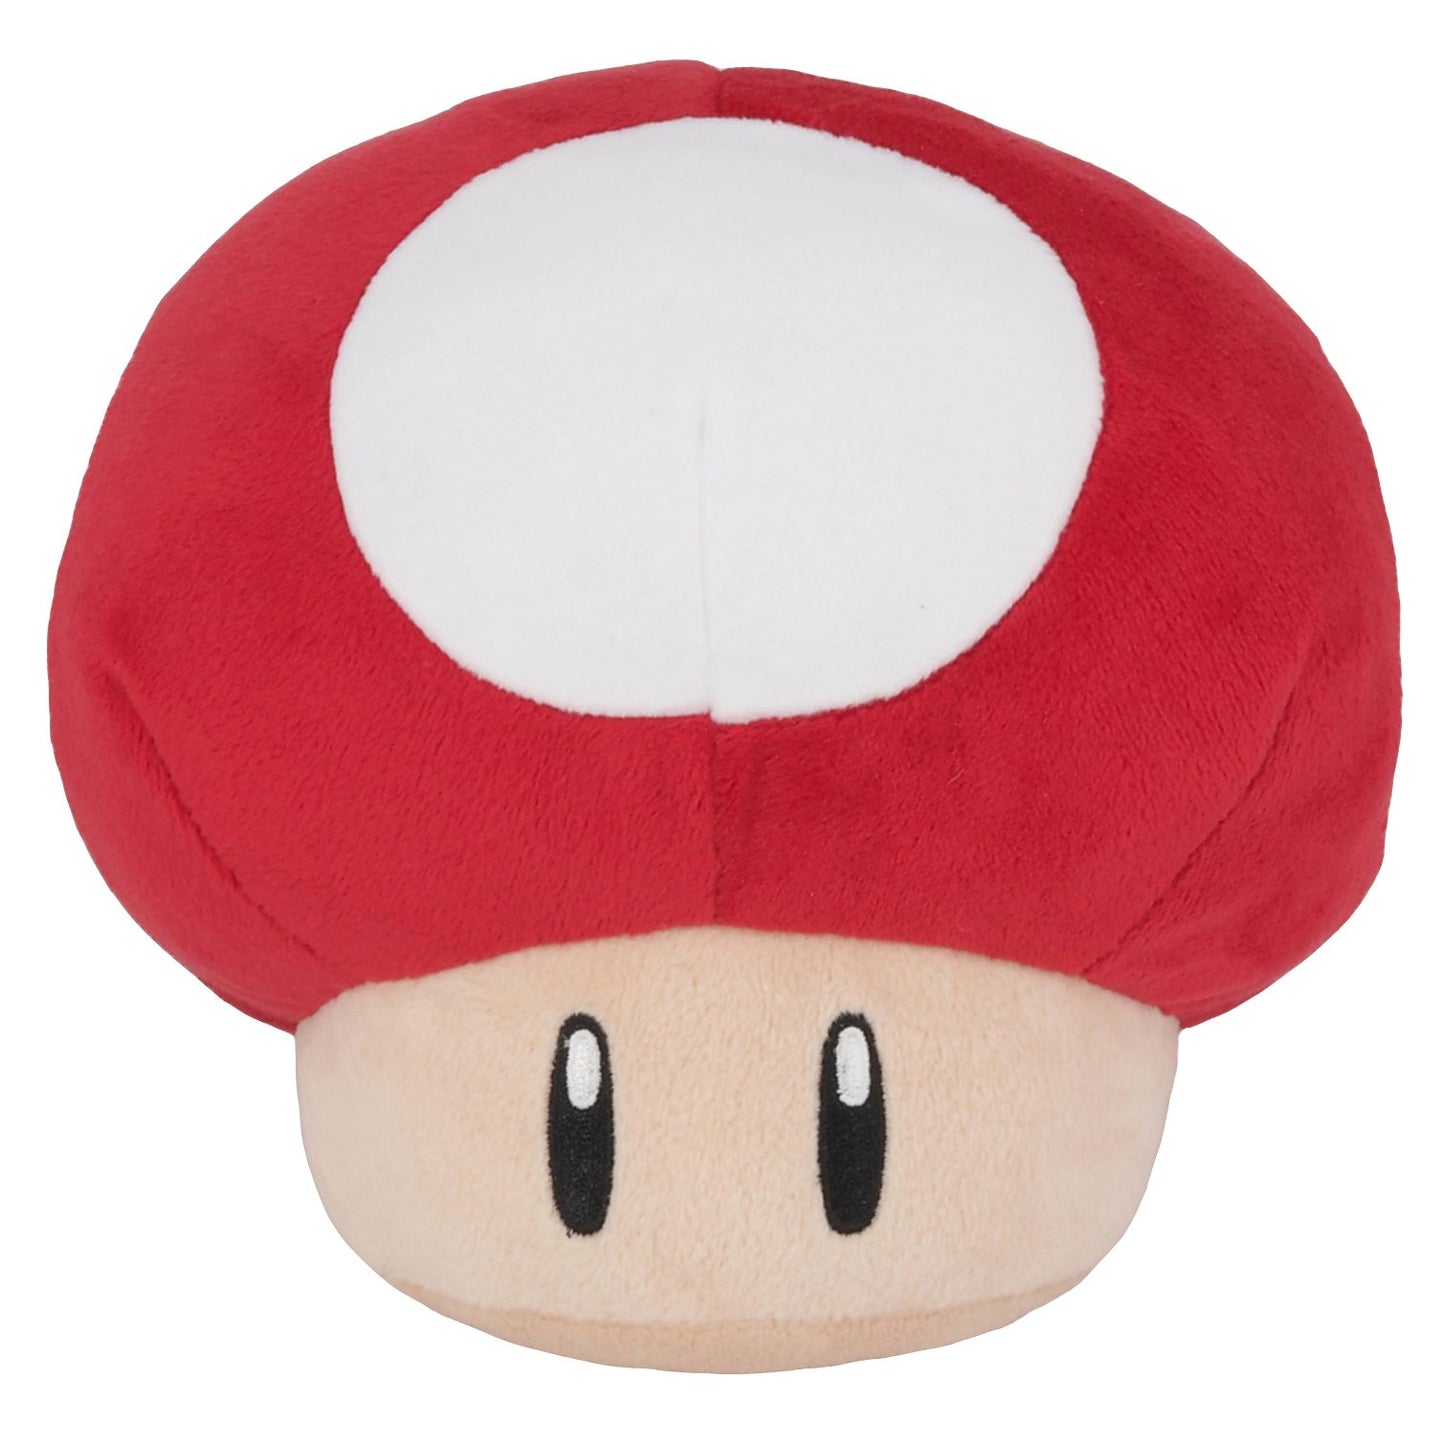 Super Mario All Star Collection Red Super Mushroom Plush, 6"